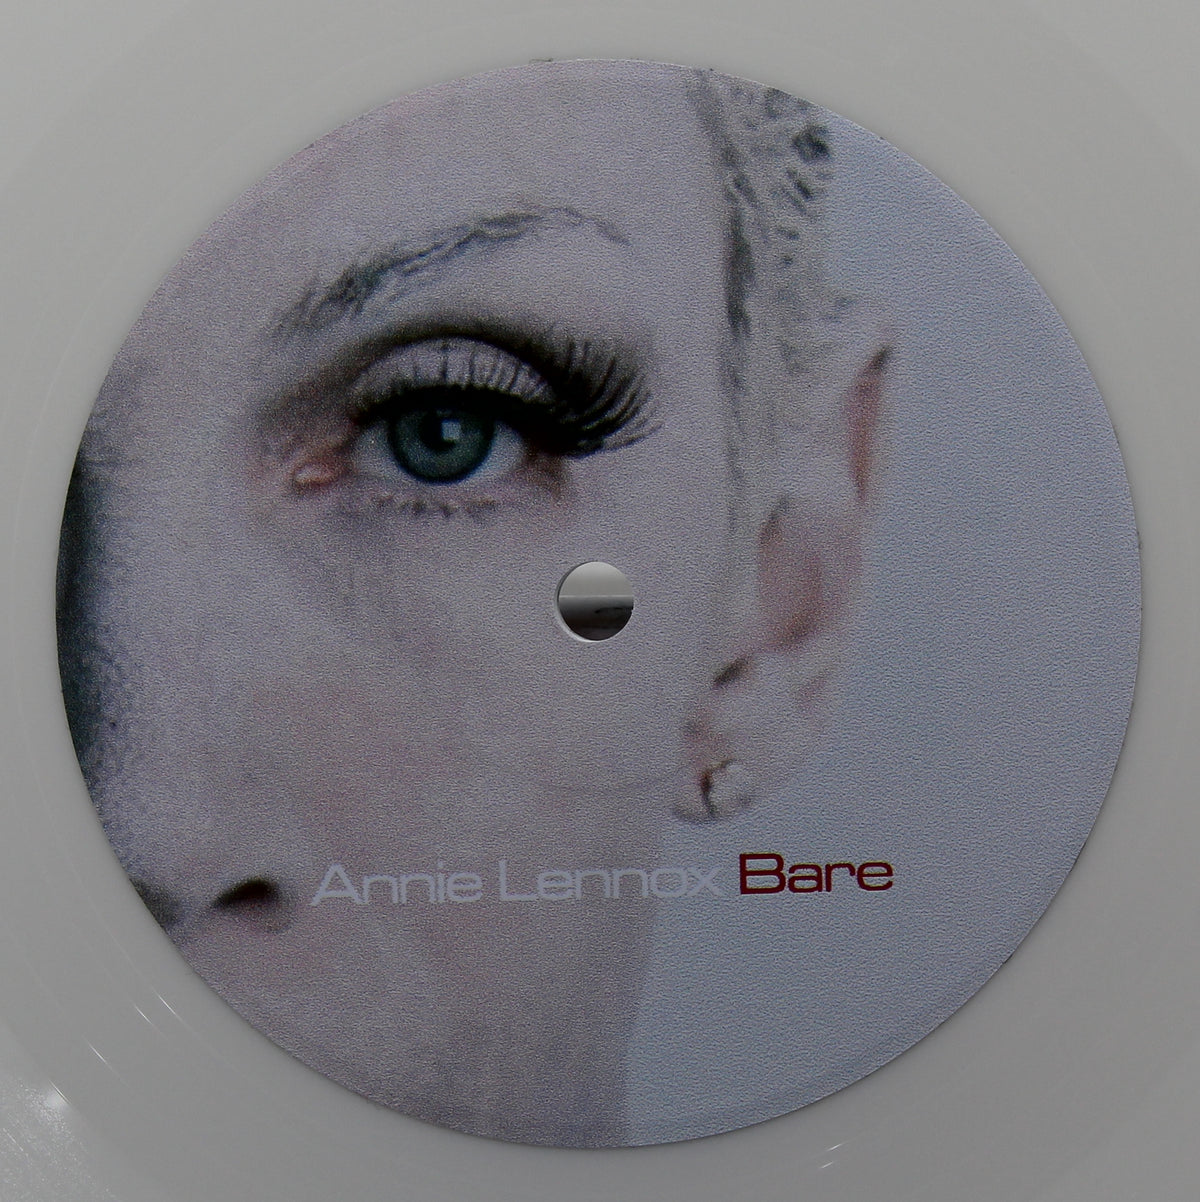 Annie Lennox – Bare, 2 x Vinyl, Album, Deluxe Edition, Promo, Japan 2003 (Various diff)